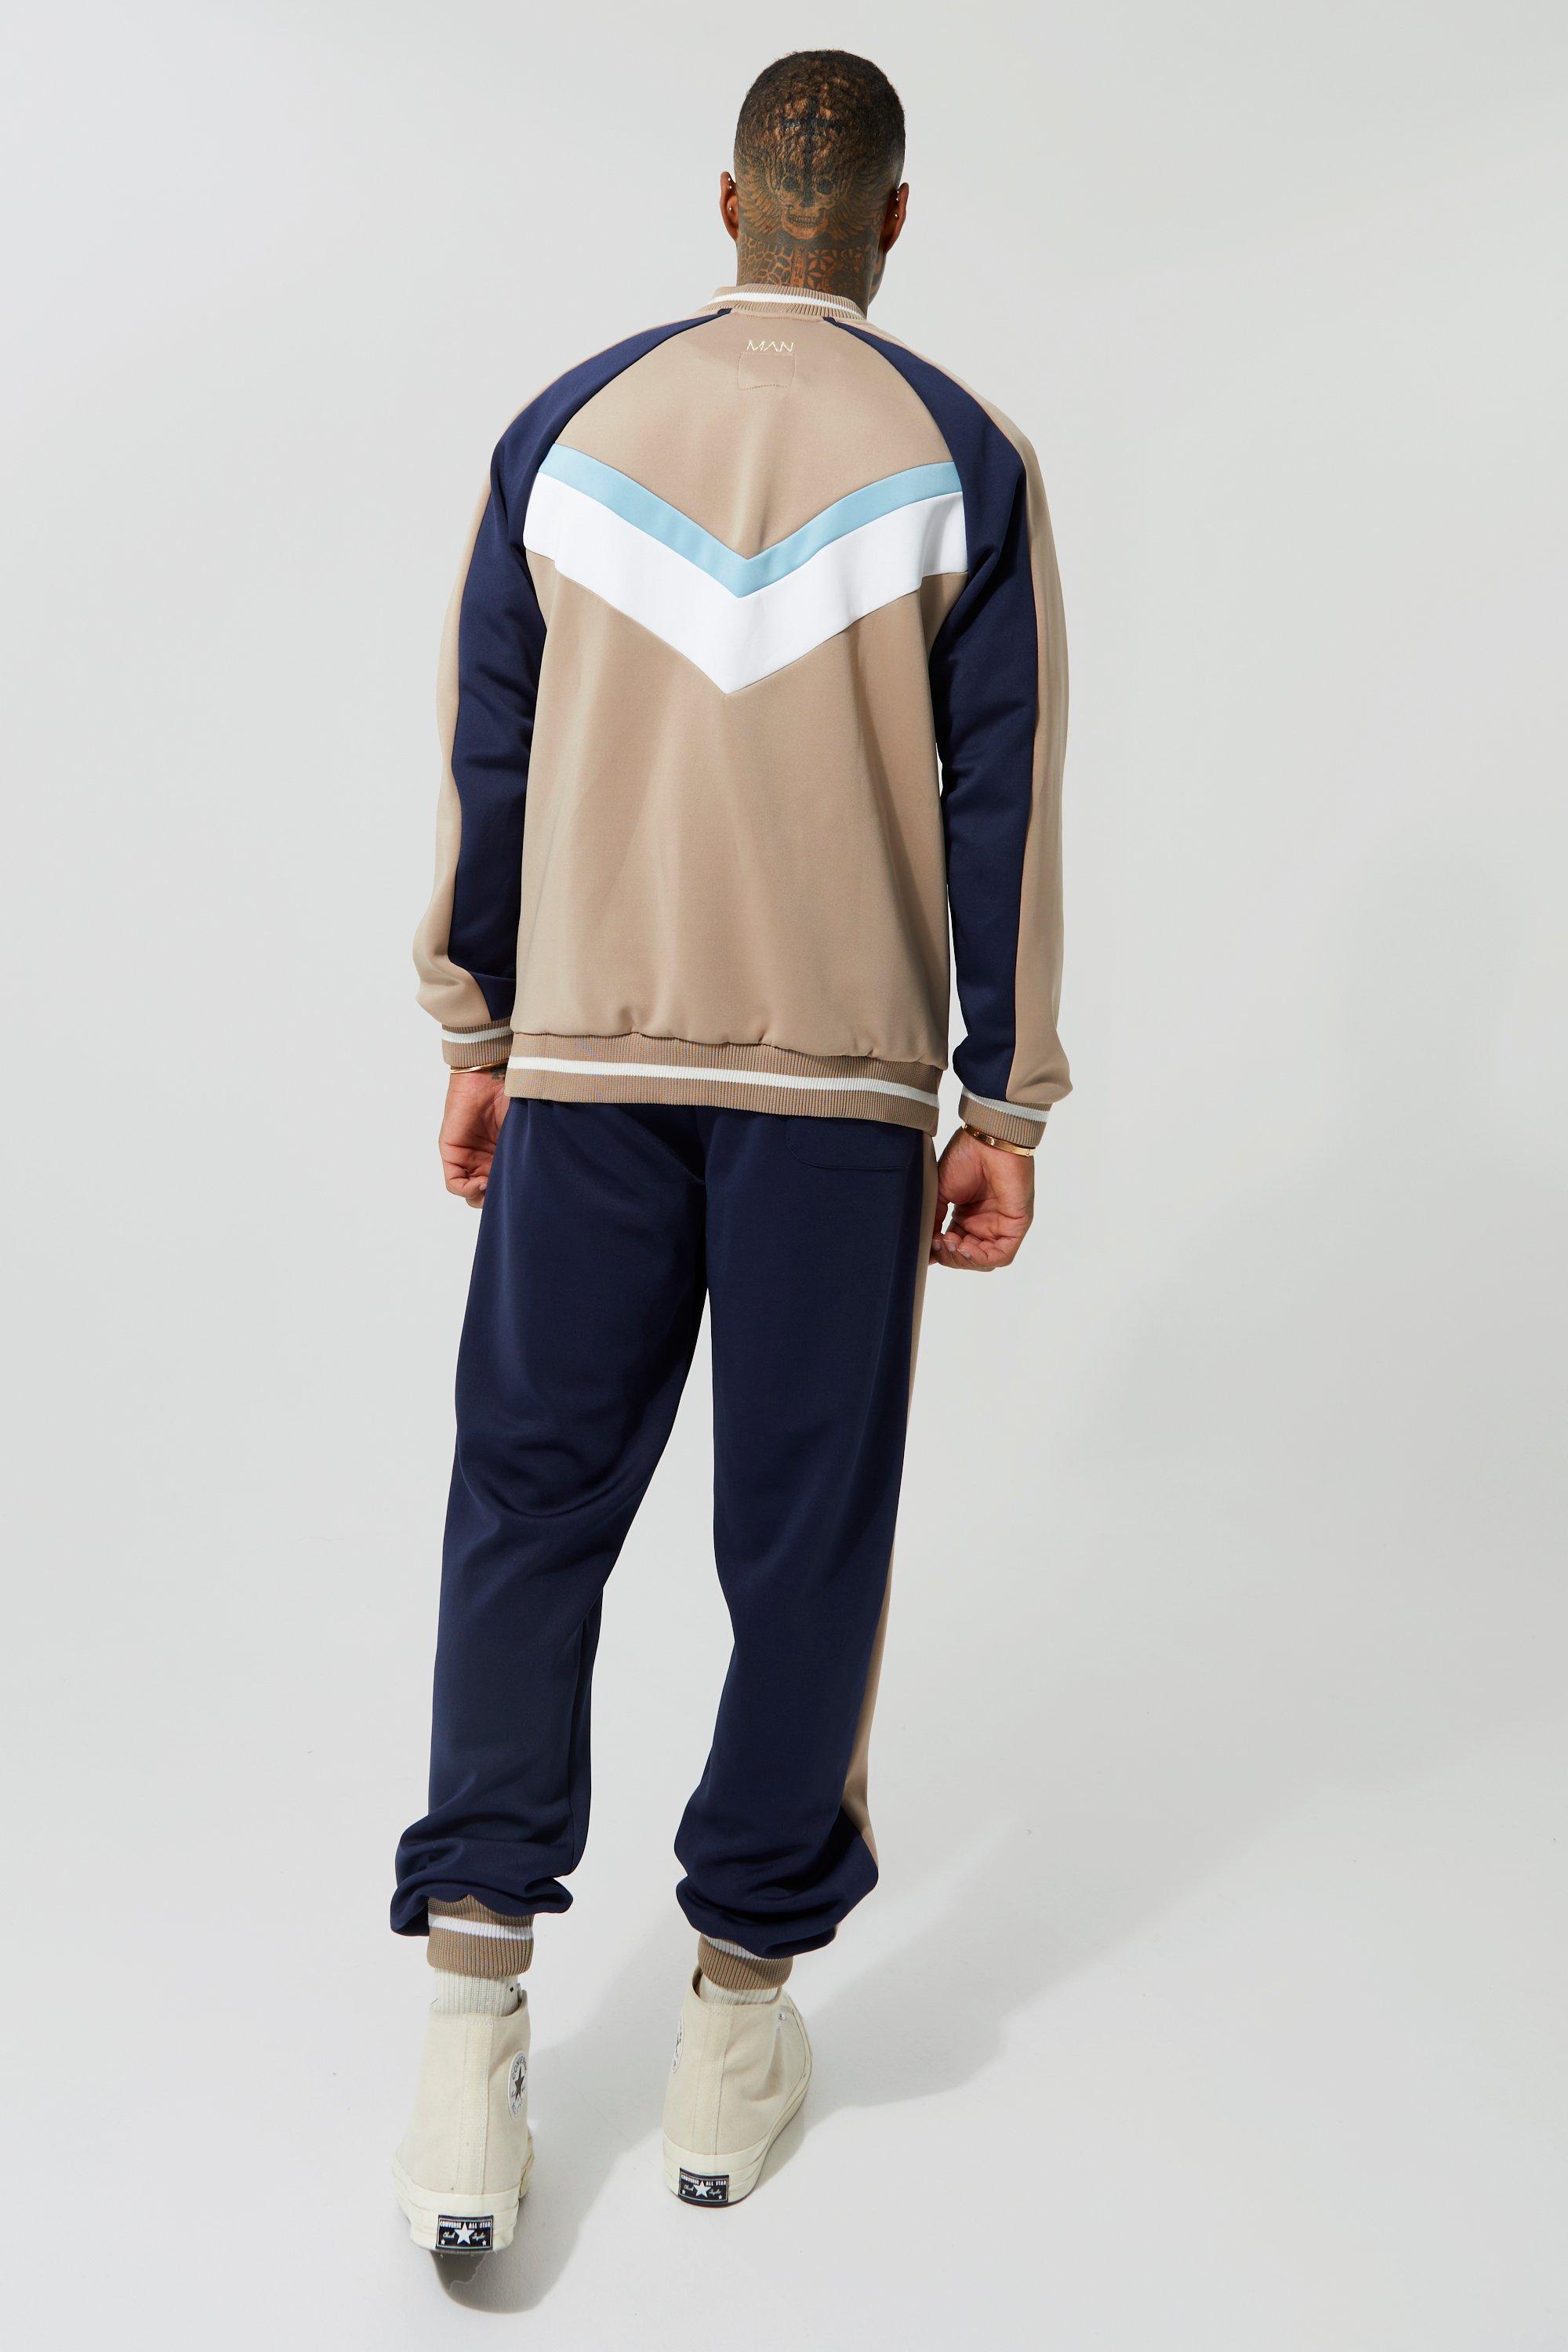 $280 NWT SET! Men's Monogram Colorblock Scuba Track Jacket + Scuba  pants sz XL